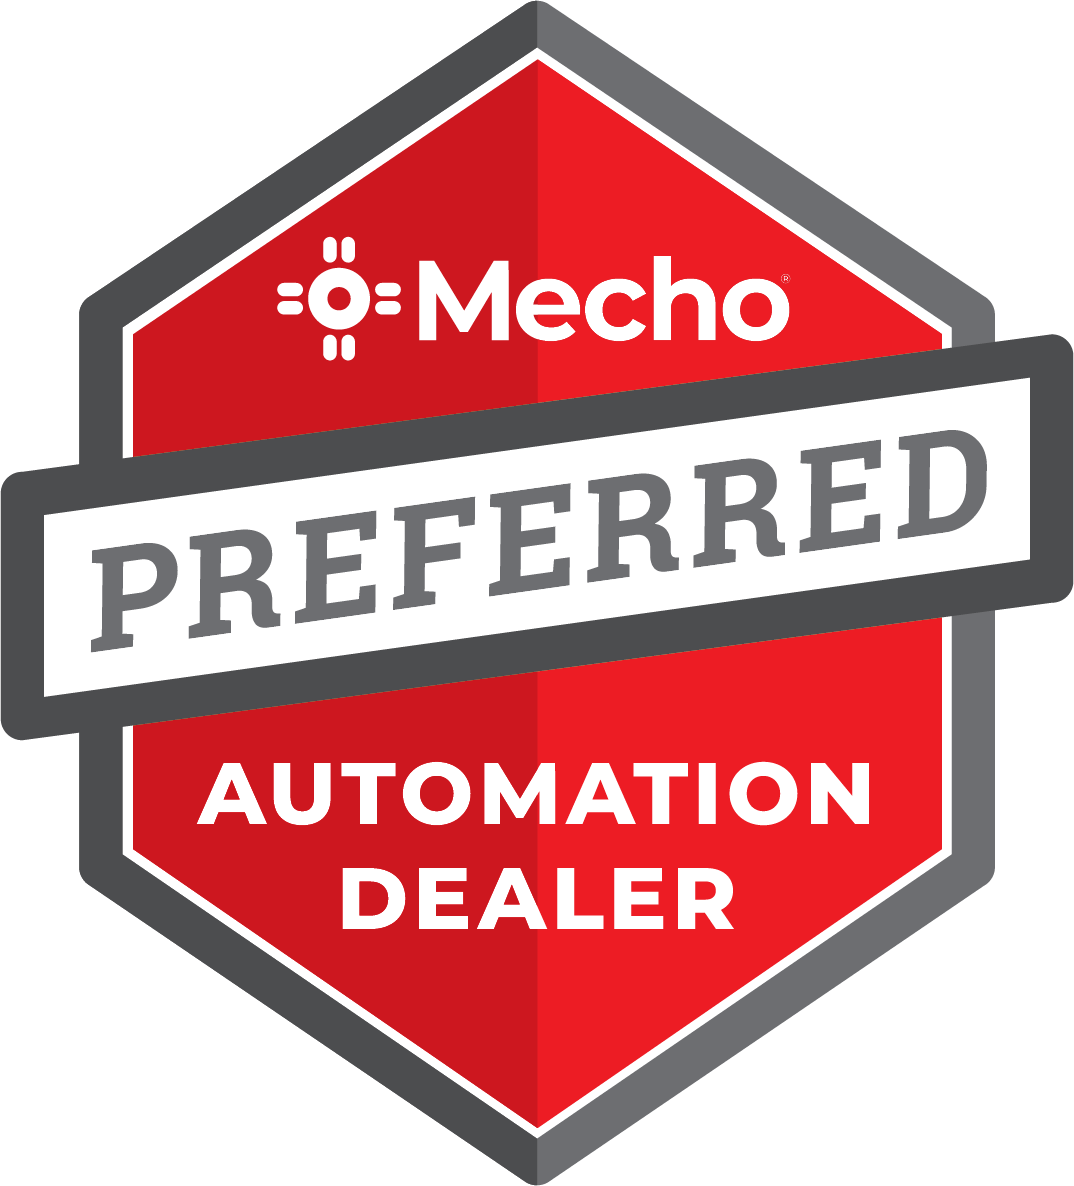 Preferred Automation Dealer